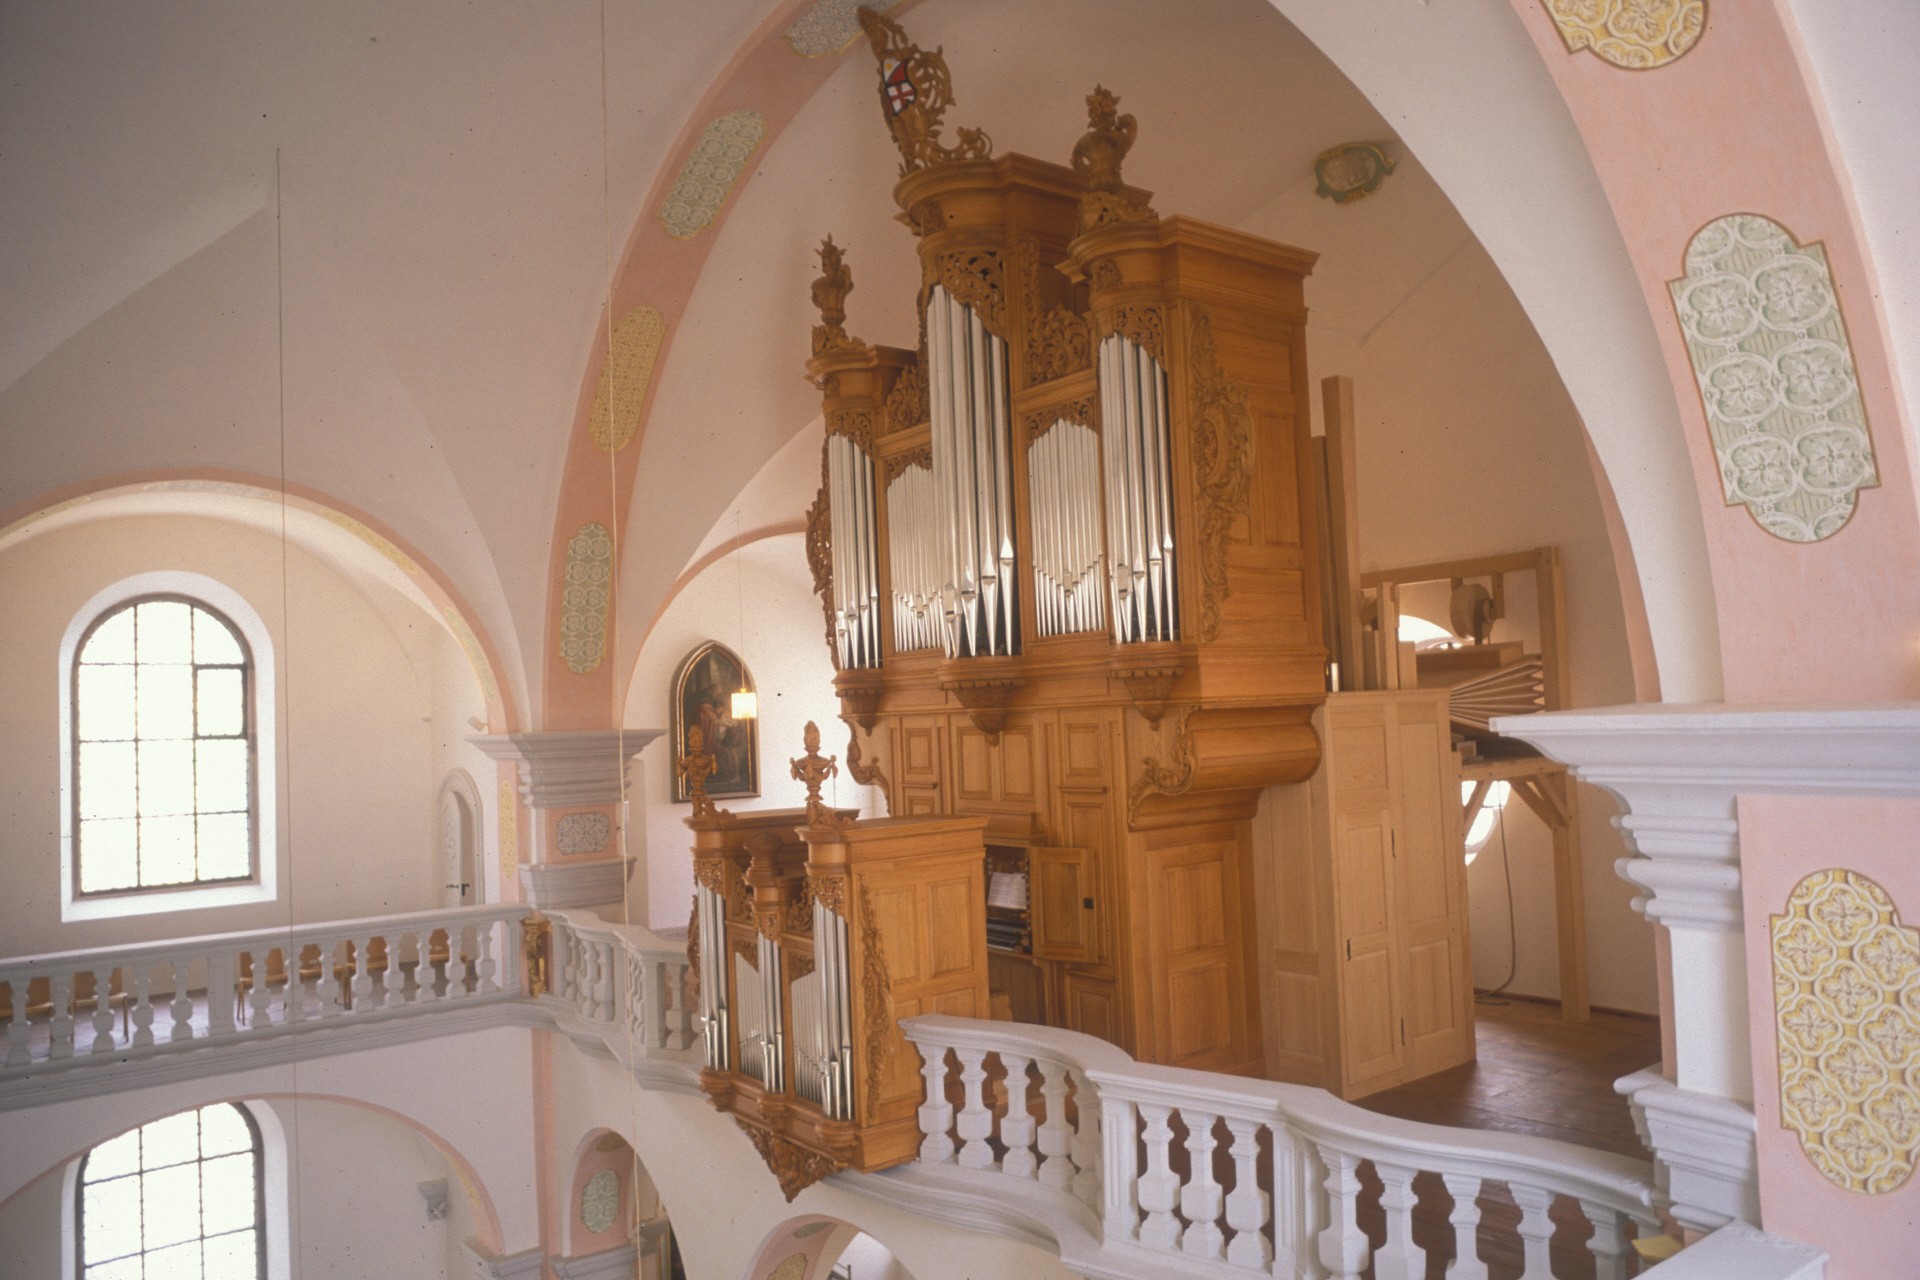 Herzog-SingerRekonstruktionBenediktinerkirche.jpg - 428061 Bytes - 1280 x 1920 Pixels